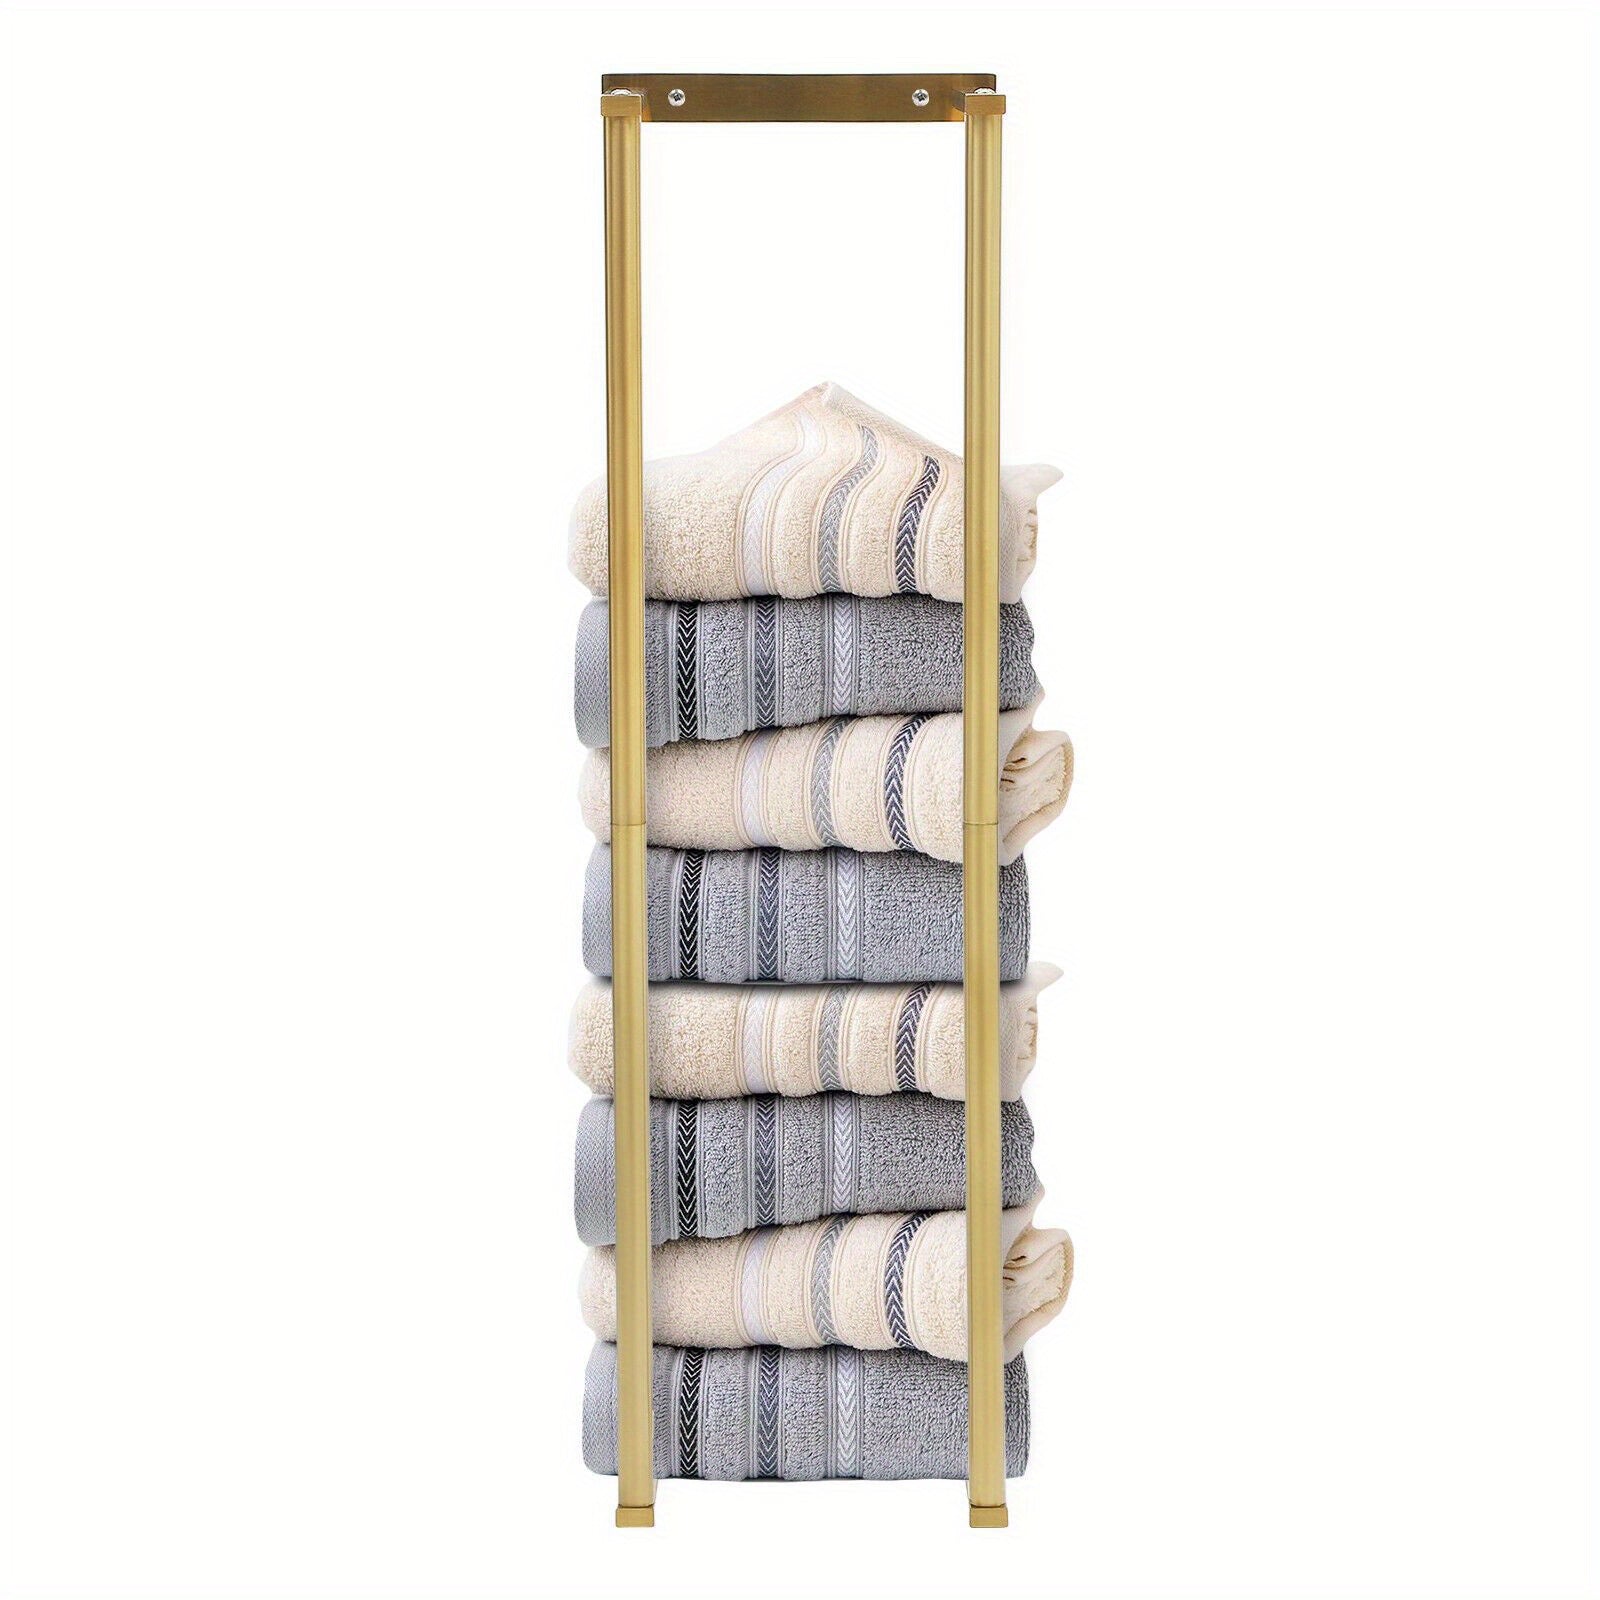 1pc Wall Mounted Towel Rack Bathroom Towel Storage Organizer Towel Holder Stainless